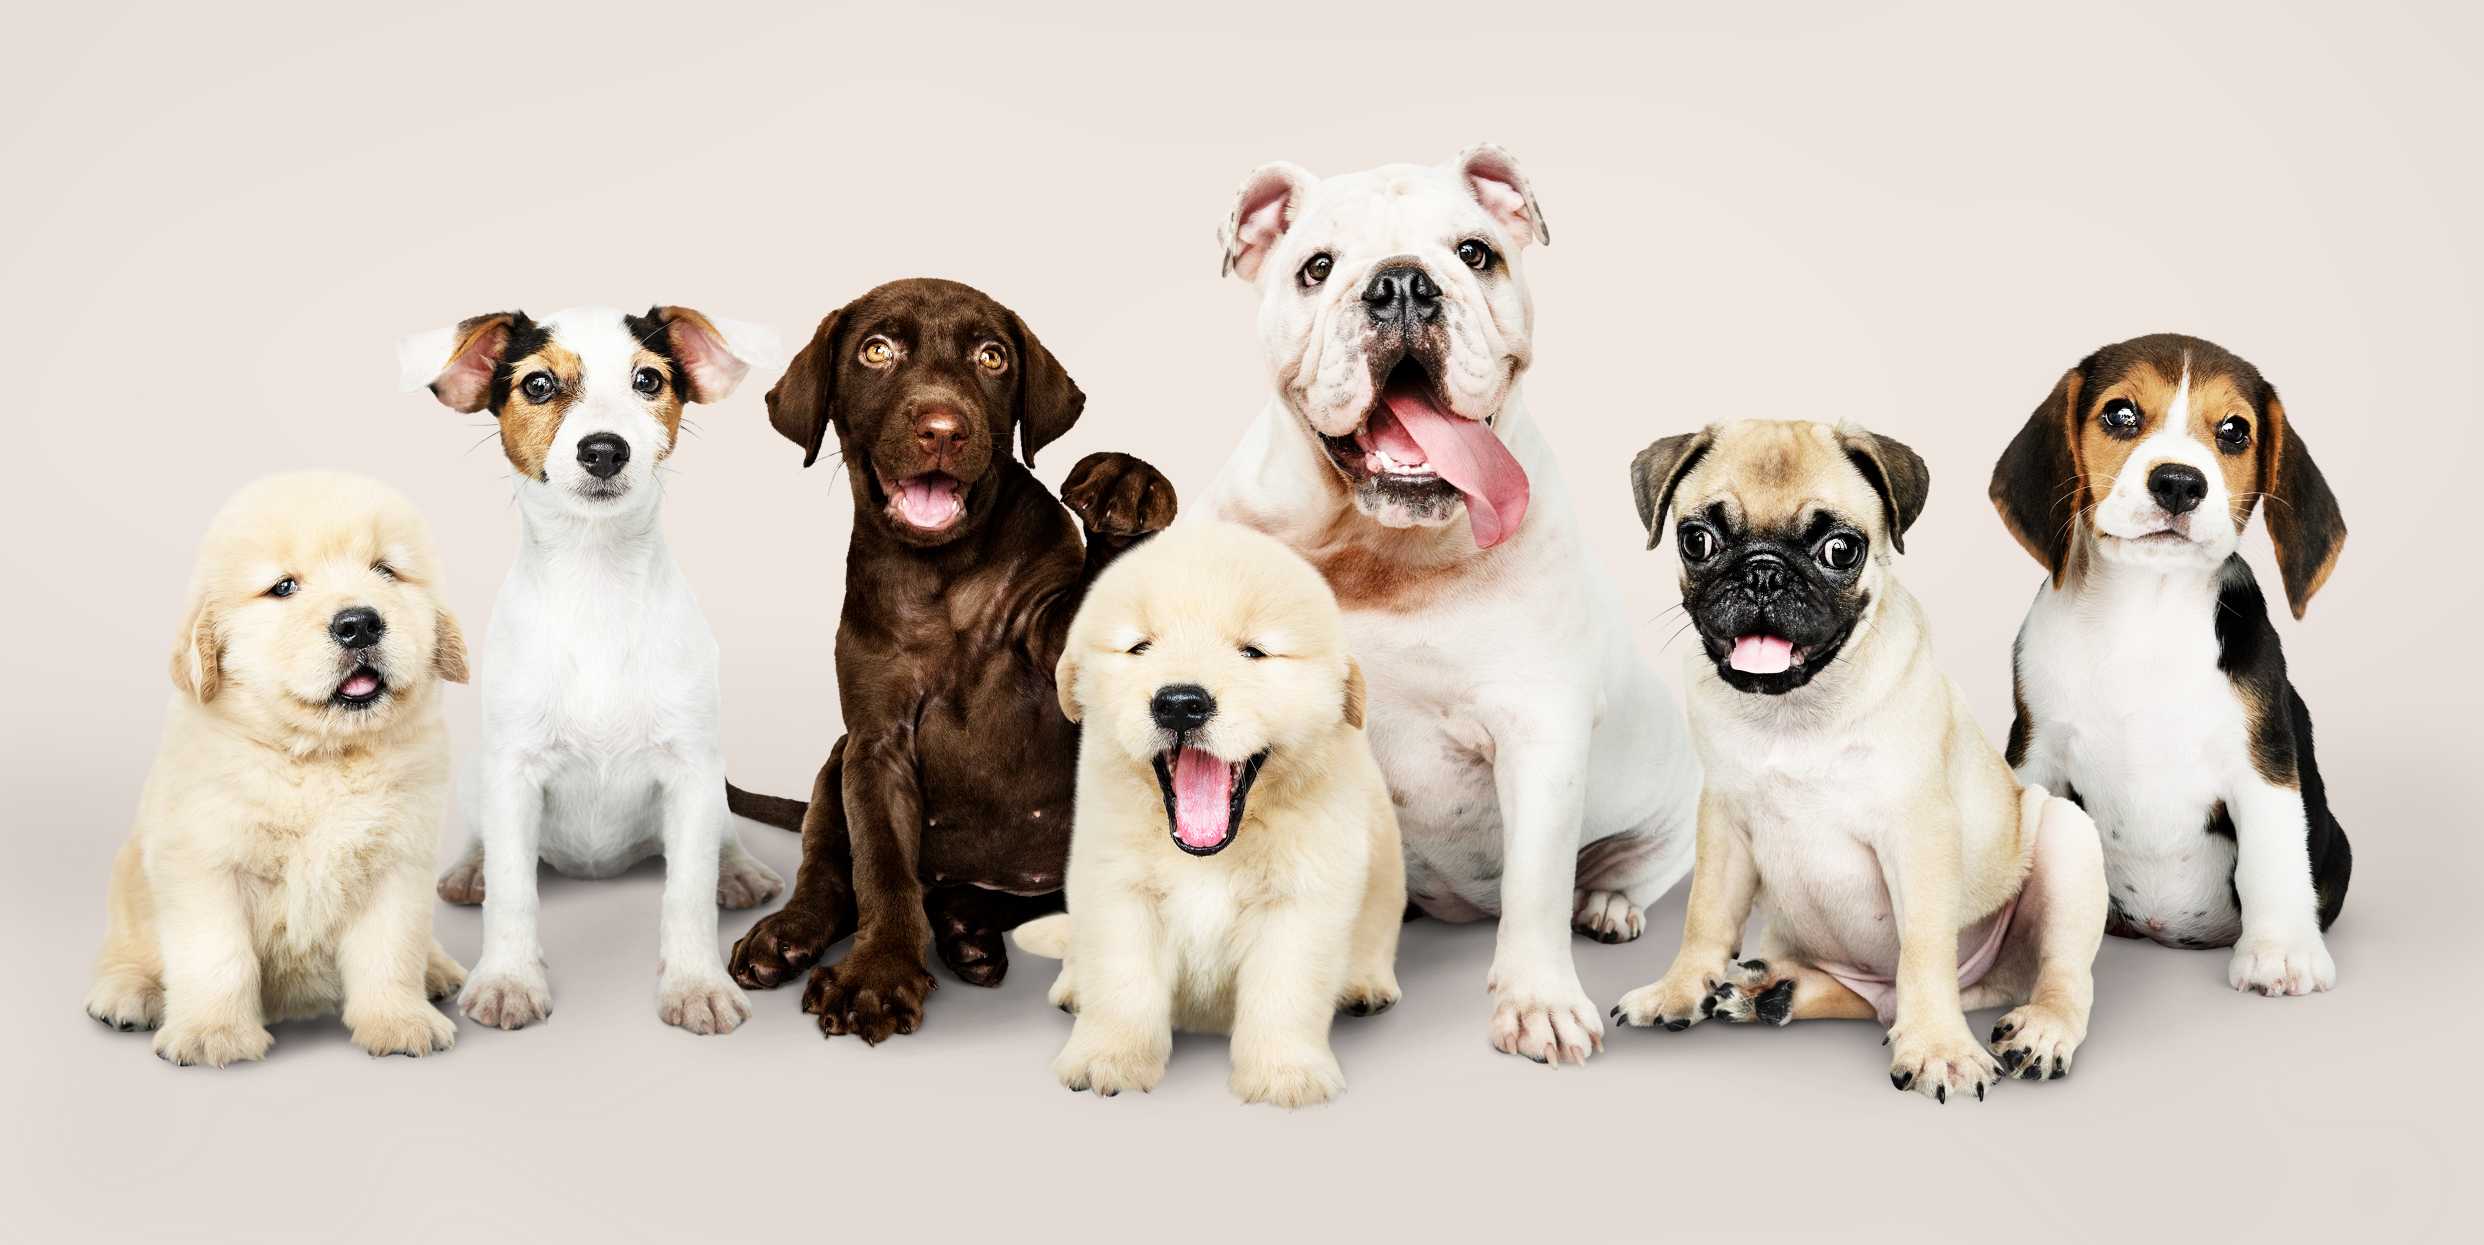 Adorable Puppies Group Portrait Photography Print - ArtSmiley